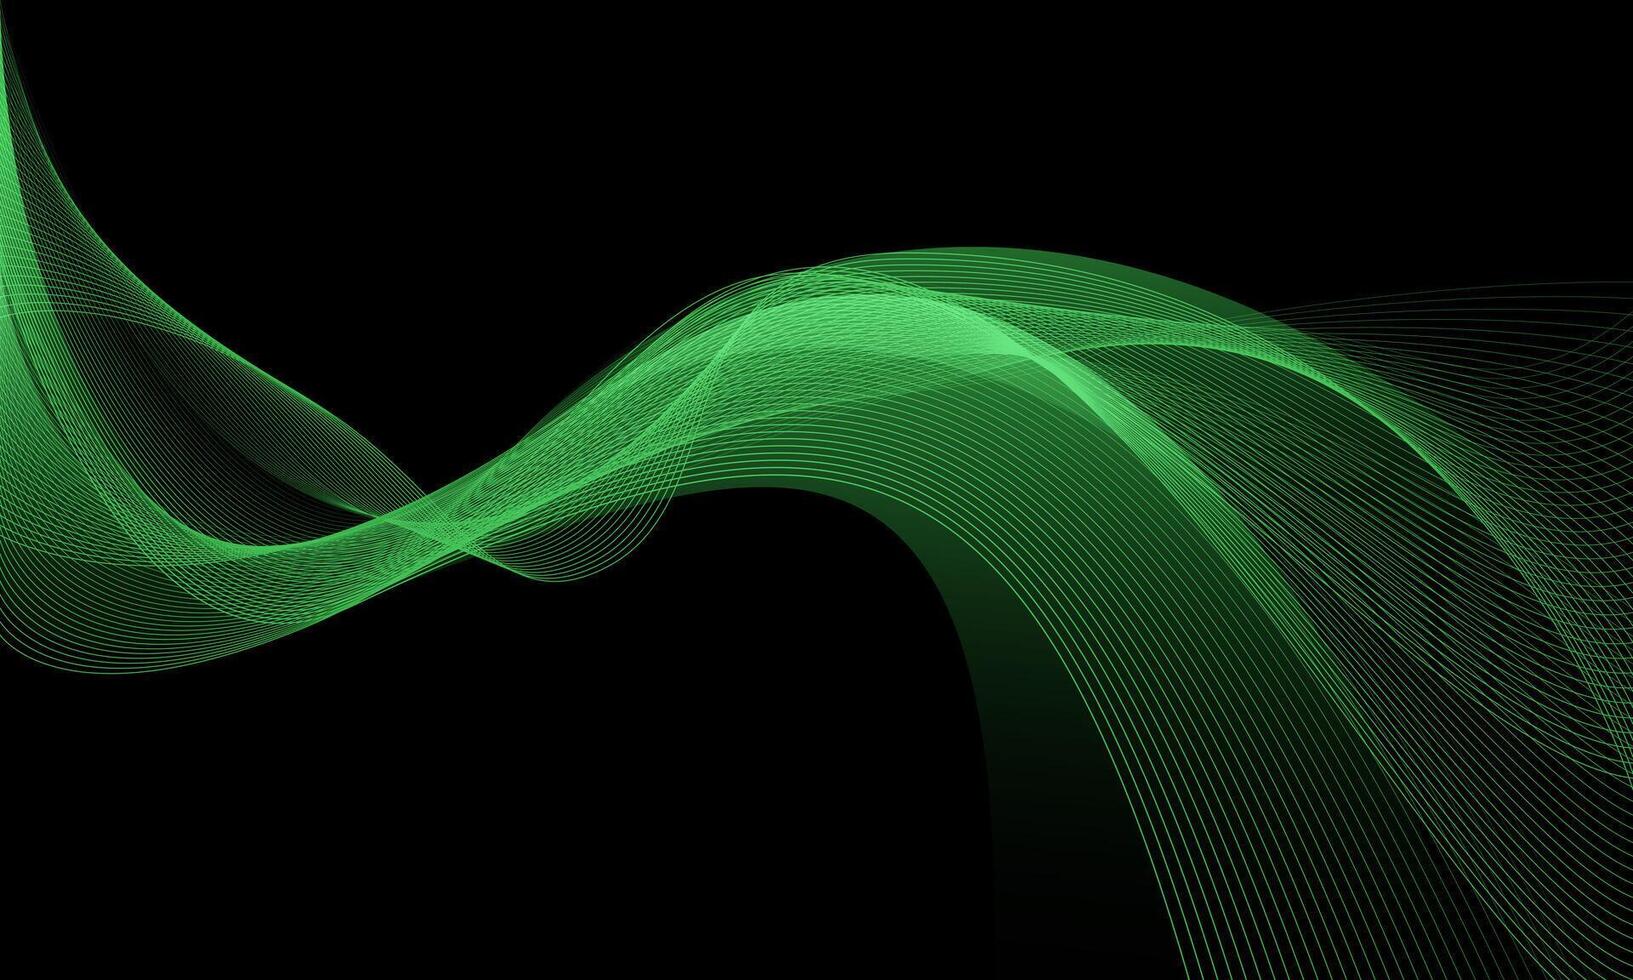 abstract groen Golf kromme lijn licht dynamisch beweging overlappen Aan zwart ontwerp modern futuristische technologie achtergrond vector